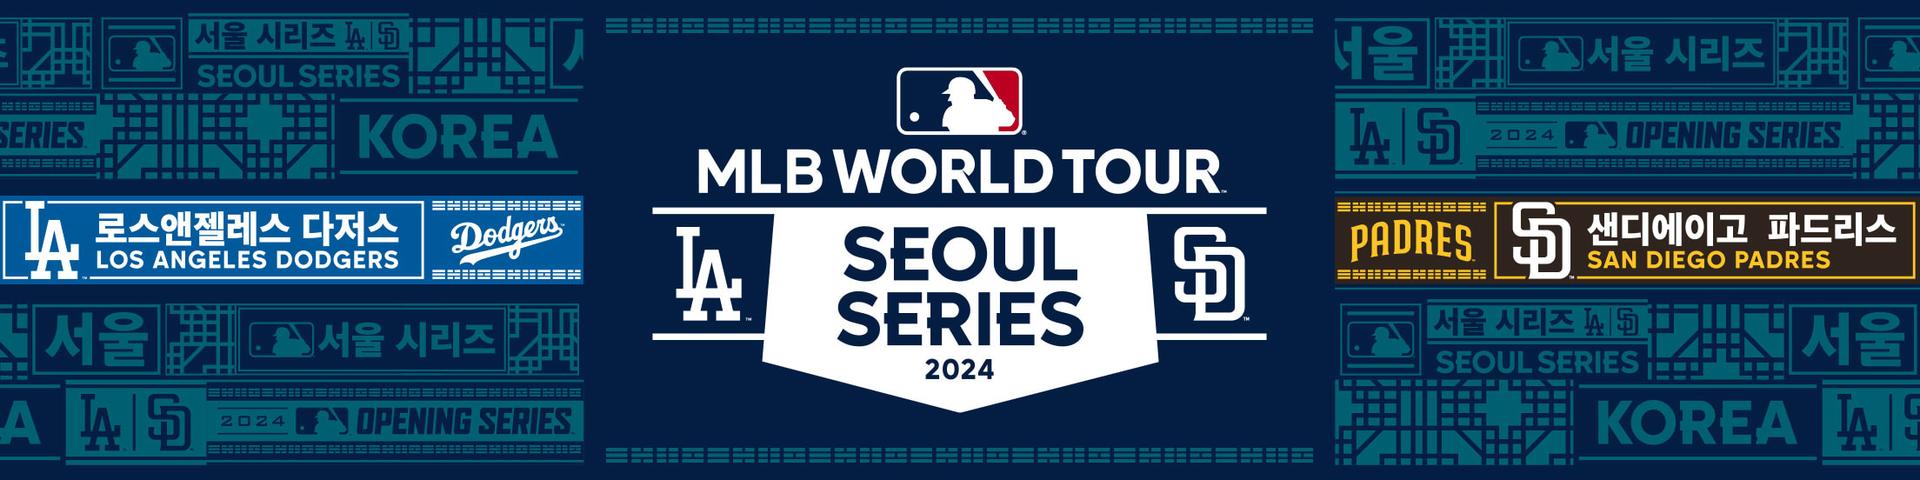 MLB World Tour